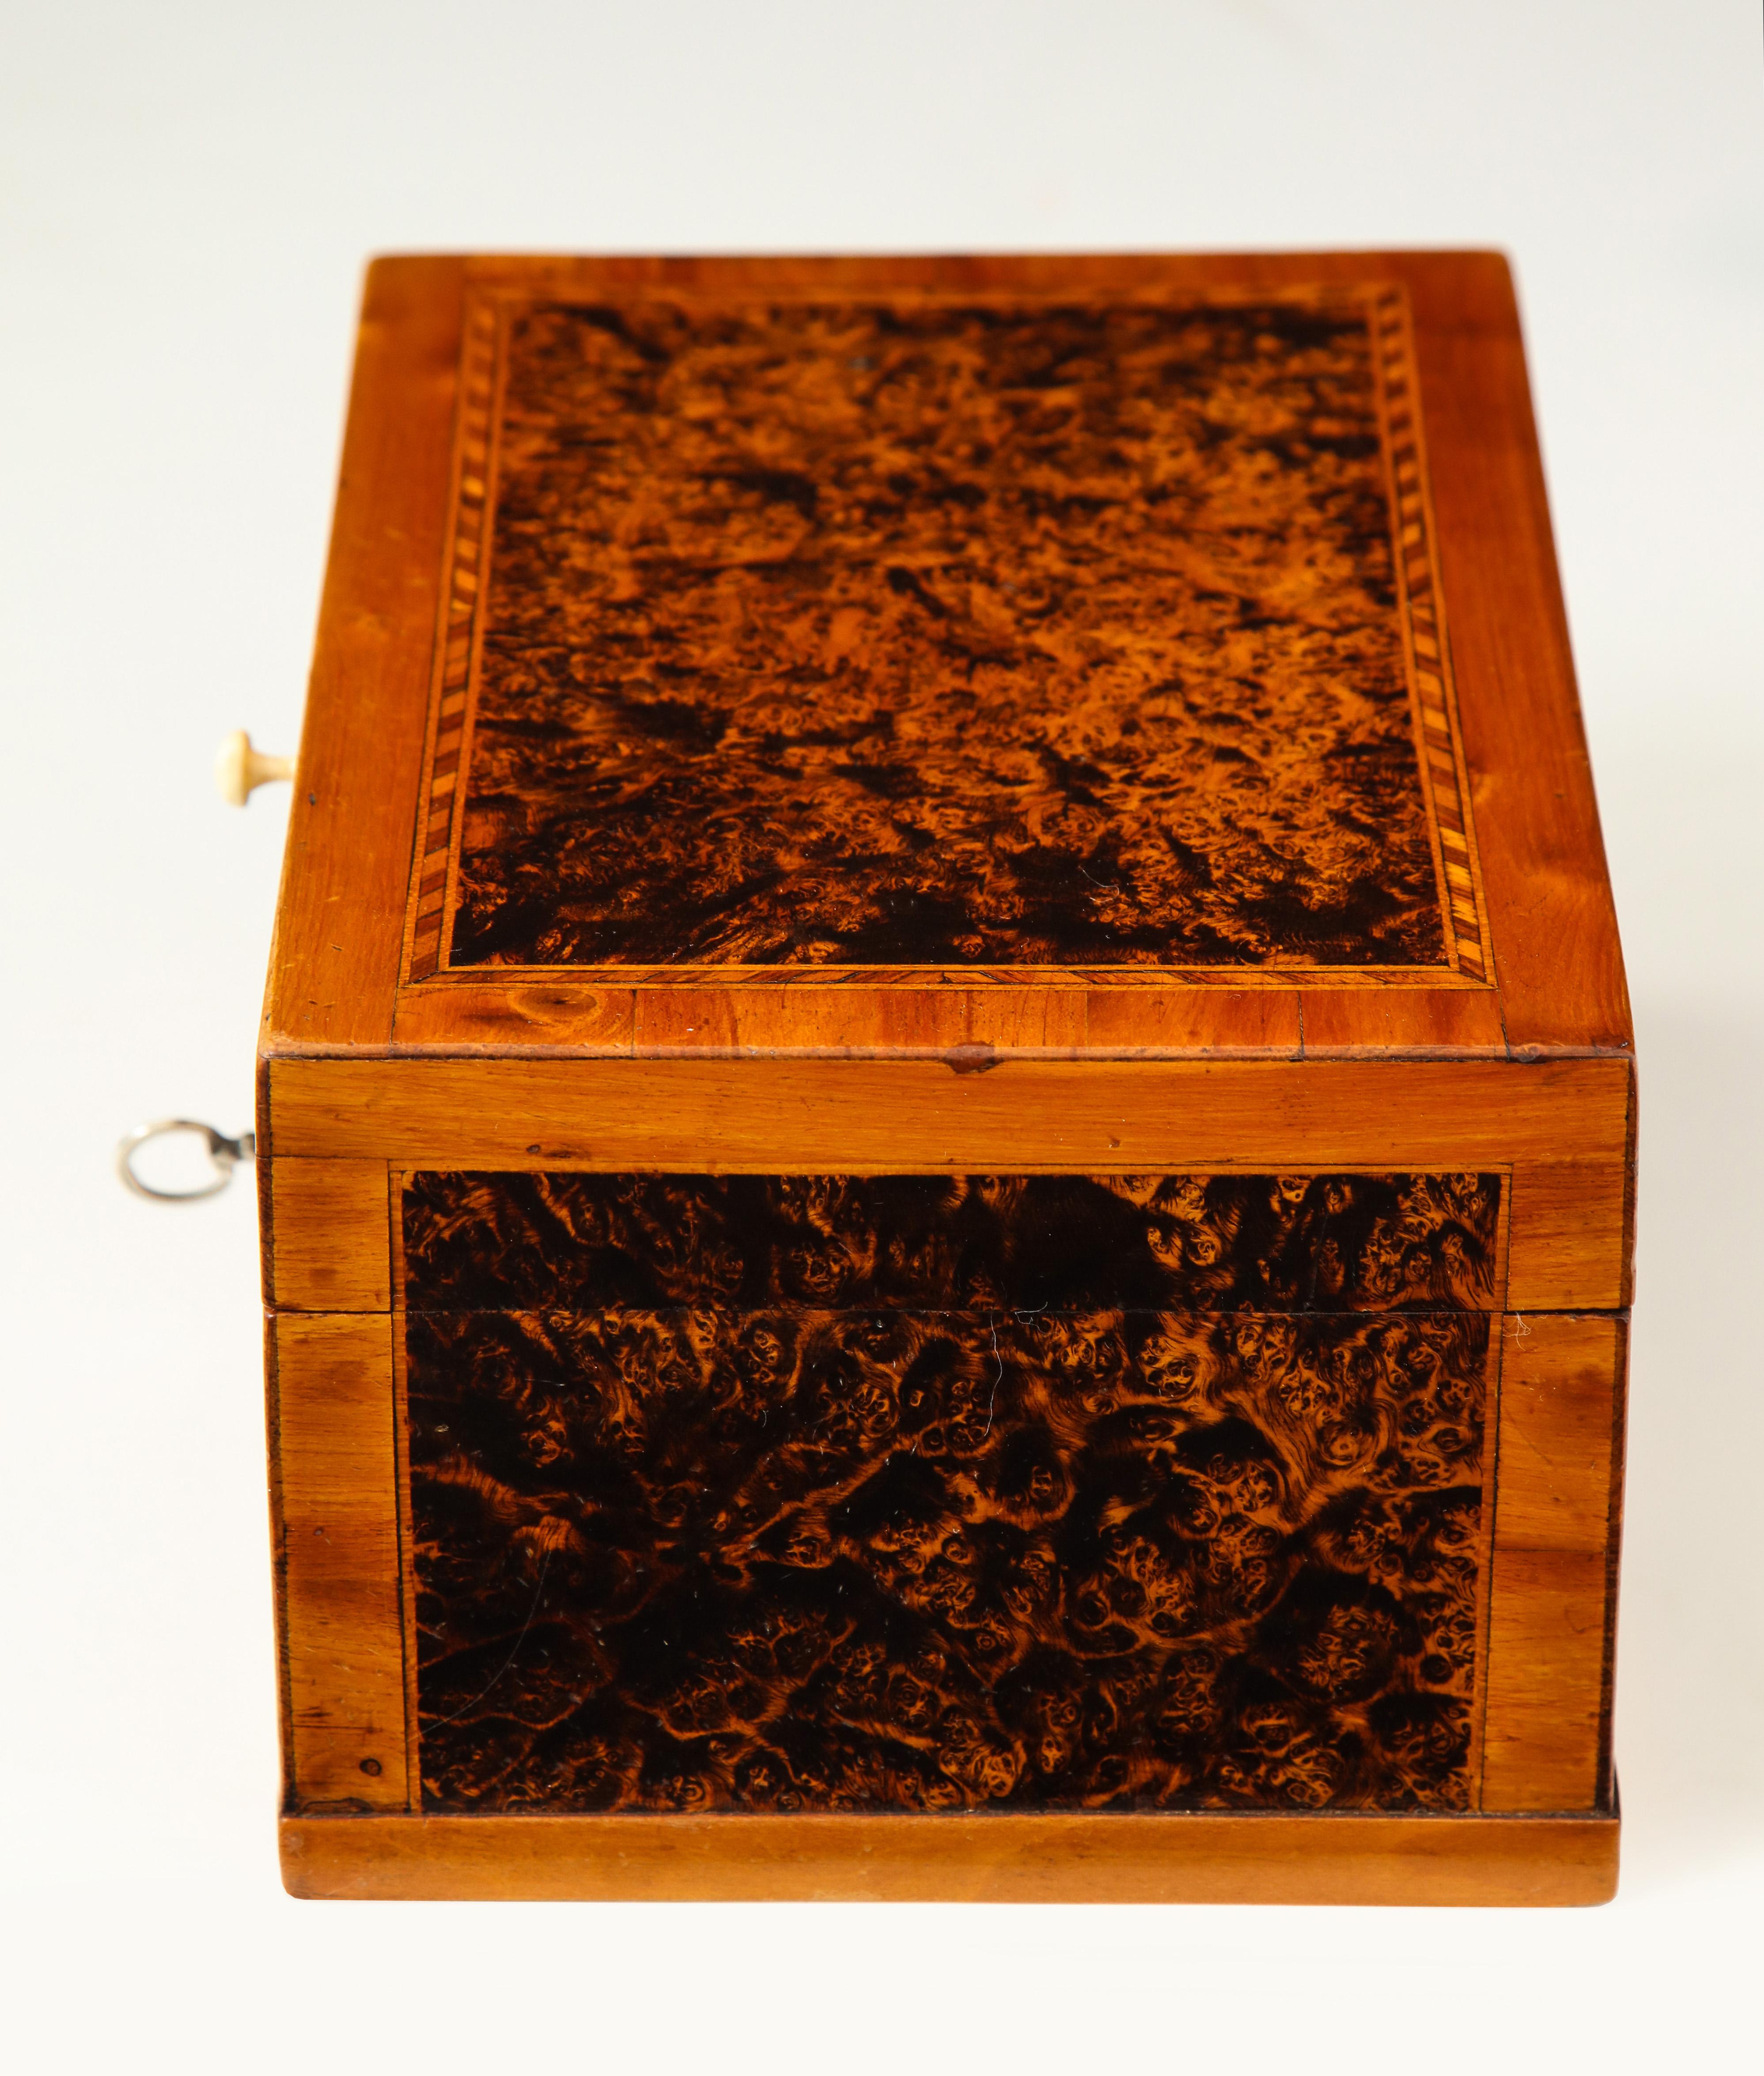 Swedish Alder Root Box, Early 19th Century (19. Jahrhundert)